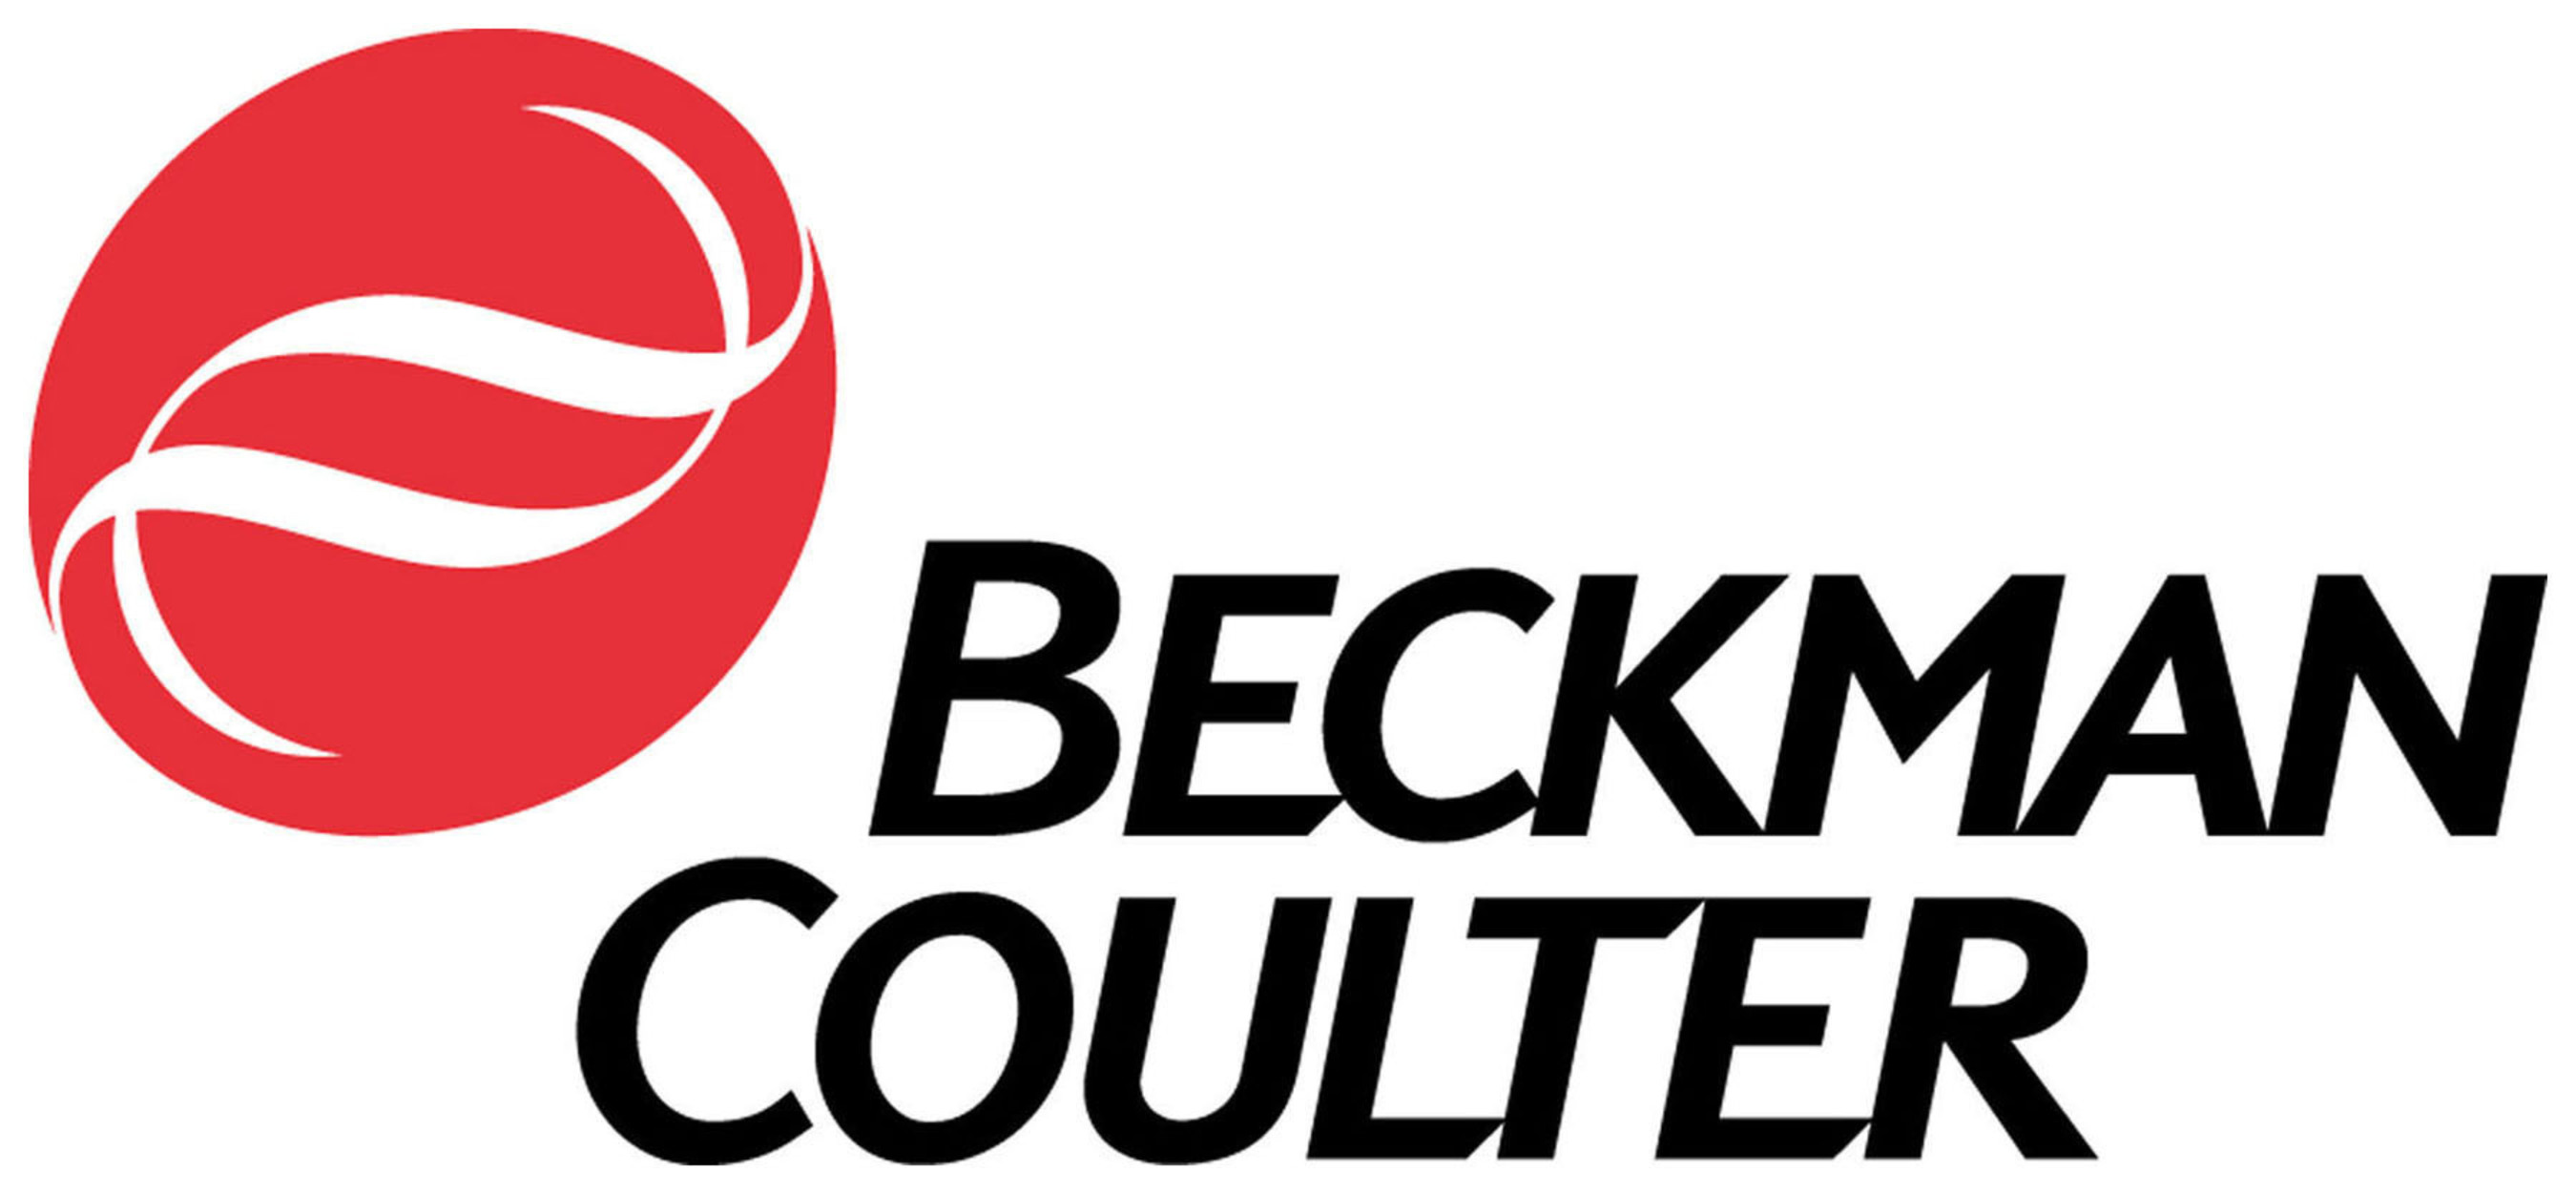 Beckman Coulter logo.